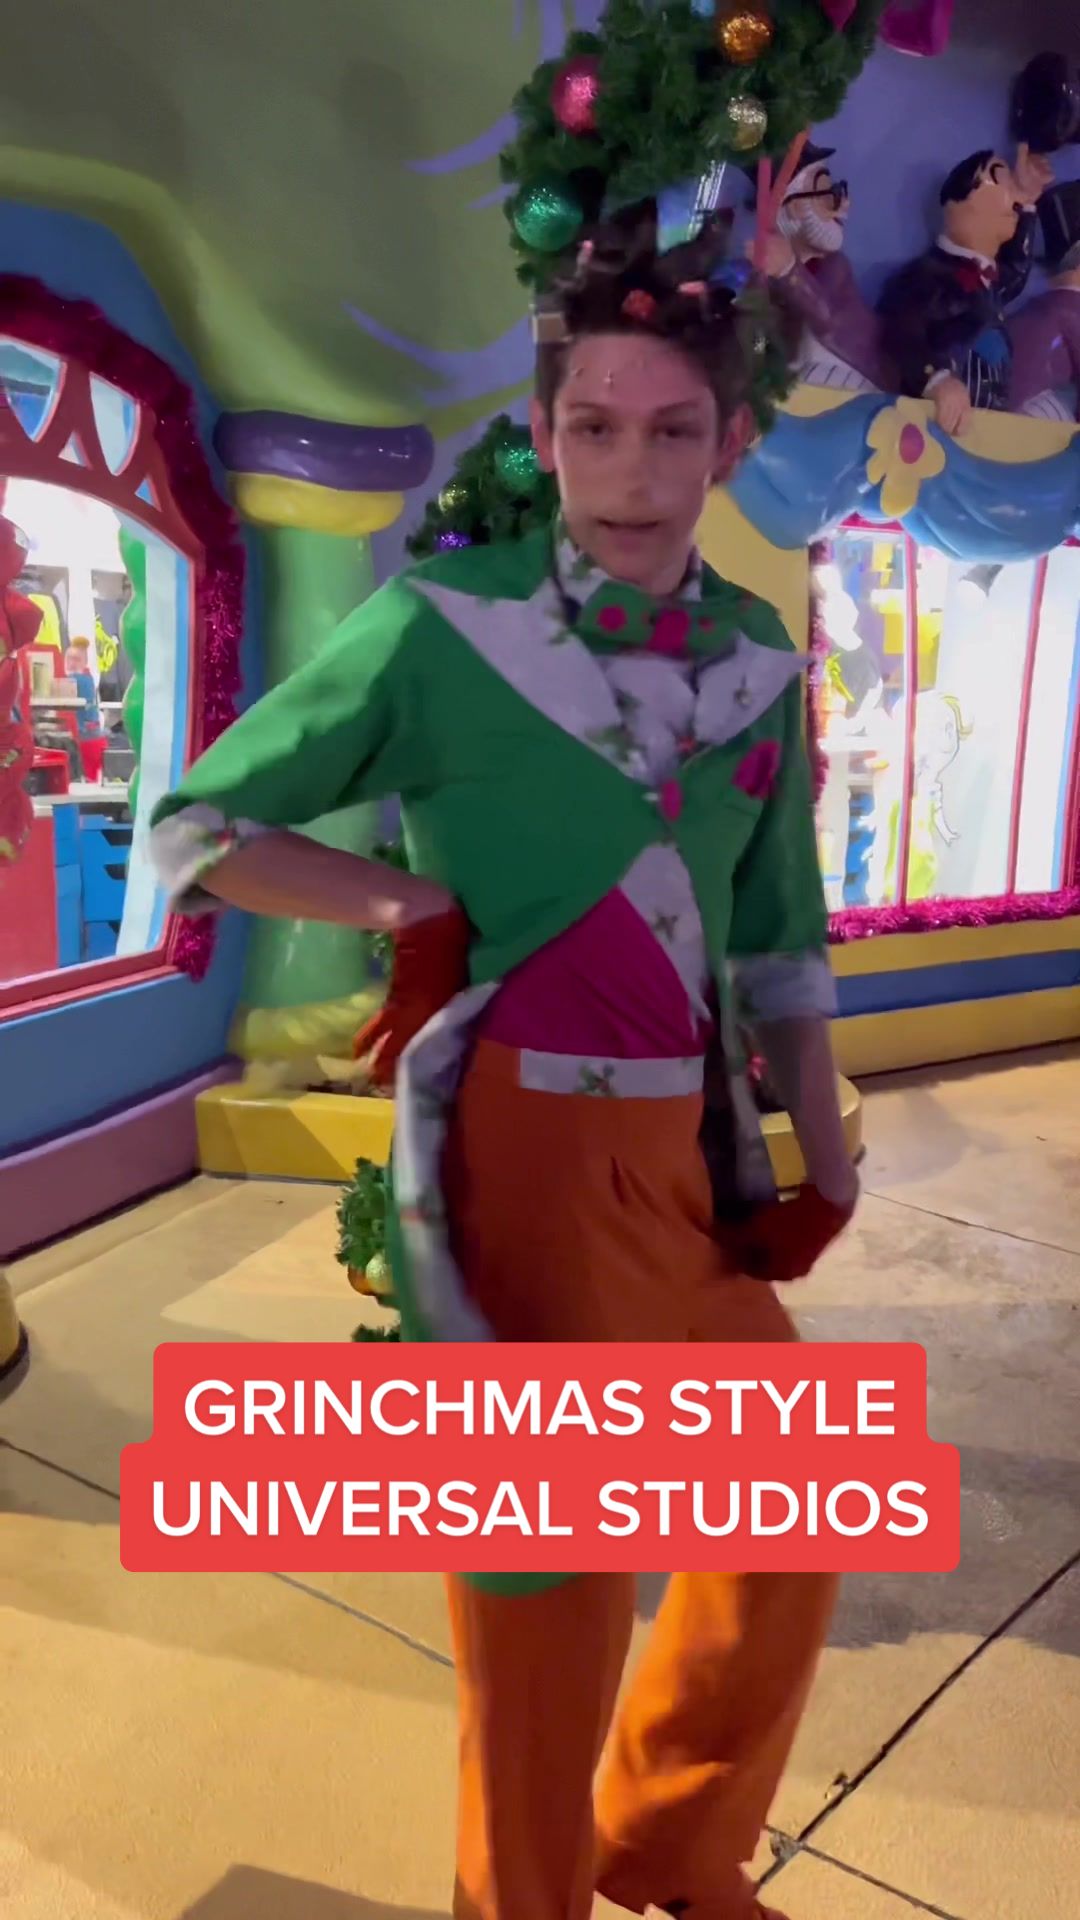 What we’re wearing this Grinchmas Holiday Season 🤣 Visiting Grinch at Universal Studios! #Grinch #GrinchTikTok #TheGrinch #GrinchTok #Grinchmas #ChristmasMovies #Christmas #Holiday #Holidays #Winter #DisneyPlus #DisneyMovie #Character #Universal #UniversalStudios #UniversalOrlando #Orlando #Vacation #ThemeParks #Comedy #Disney #DisneyWorld #DisneyParks #DisneyTikTok #DisneyAdult #Disneyland #Comedy 